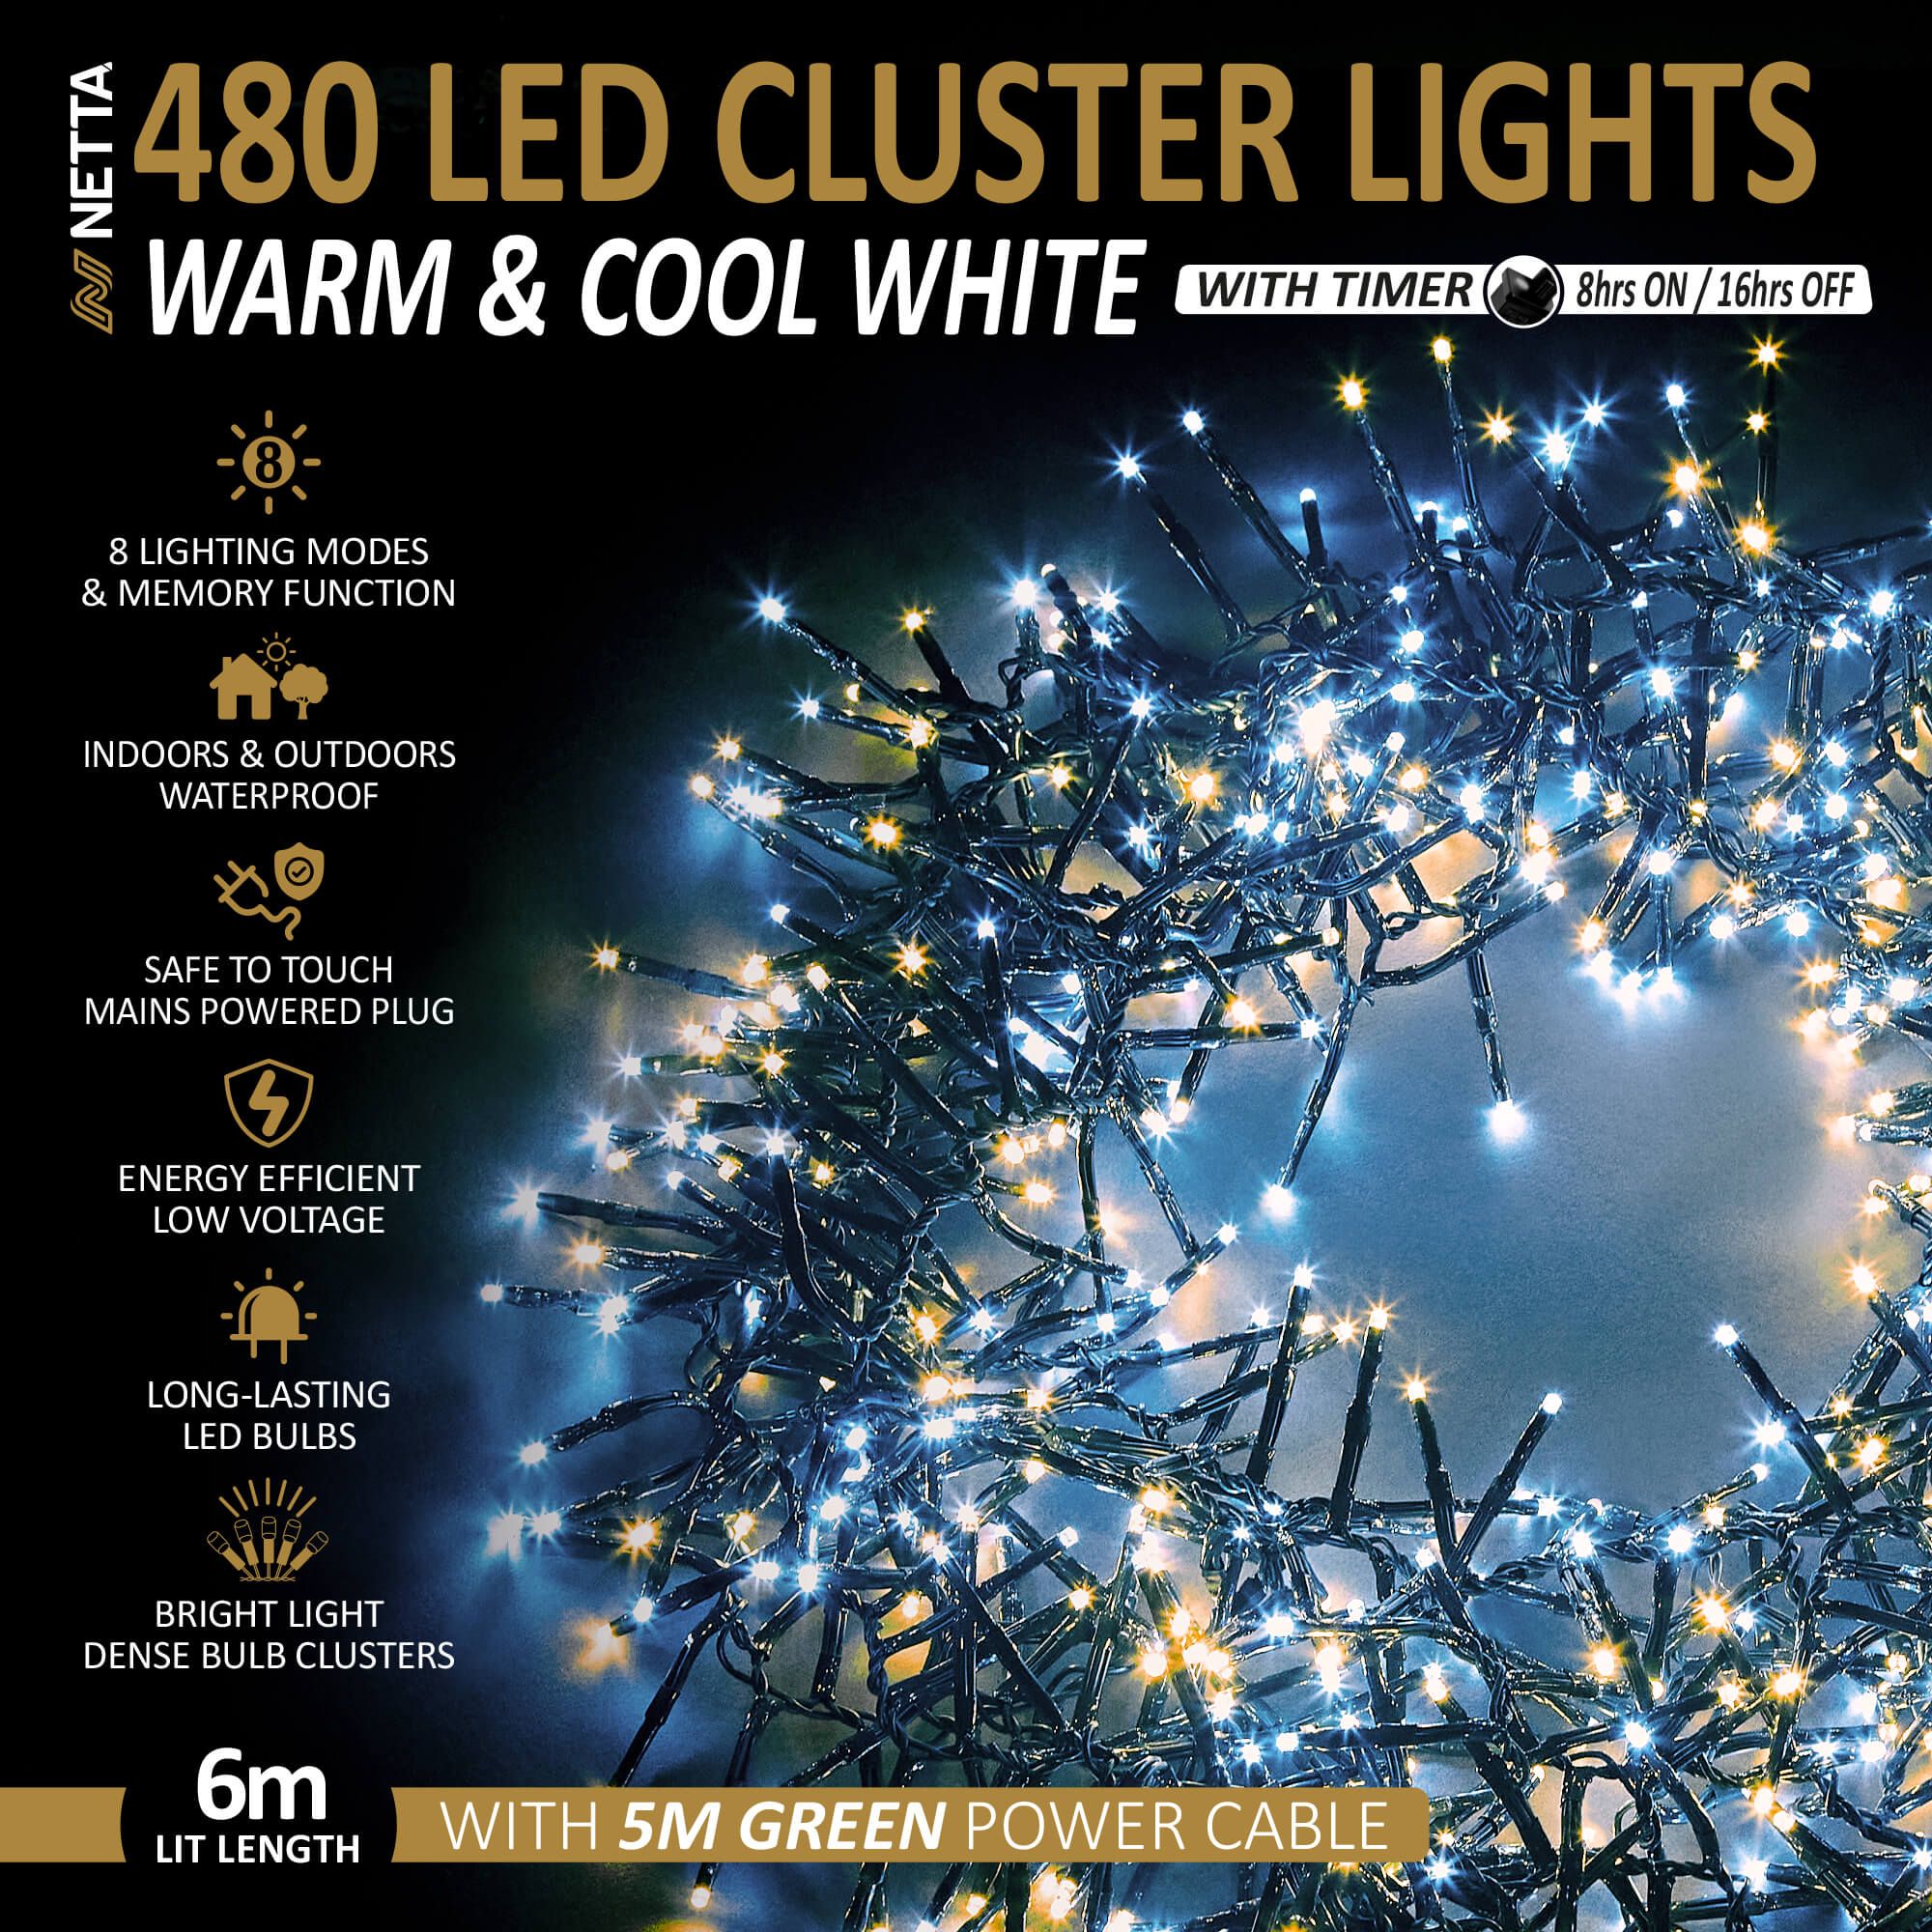 480LED Cluster String Lights - Warm & Cool White